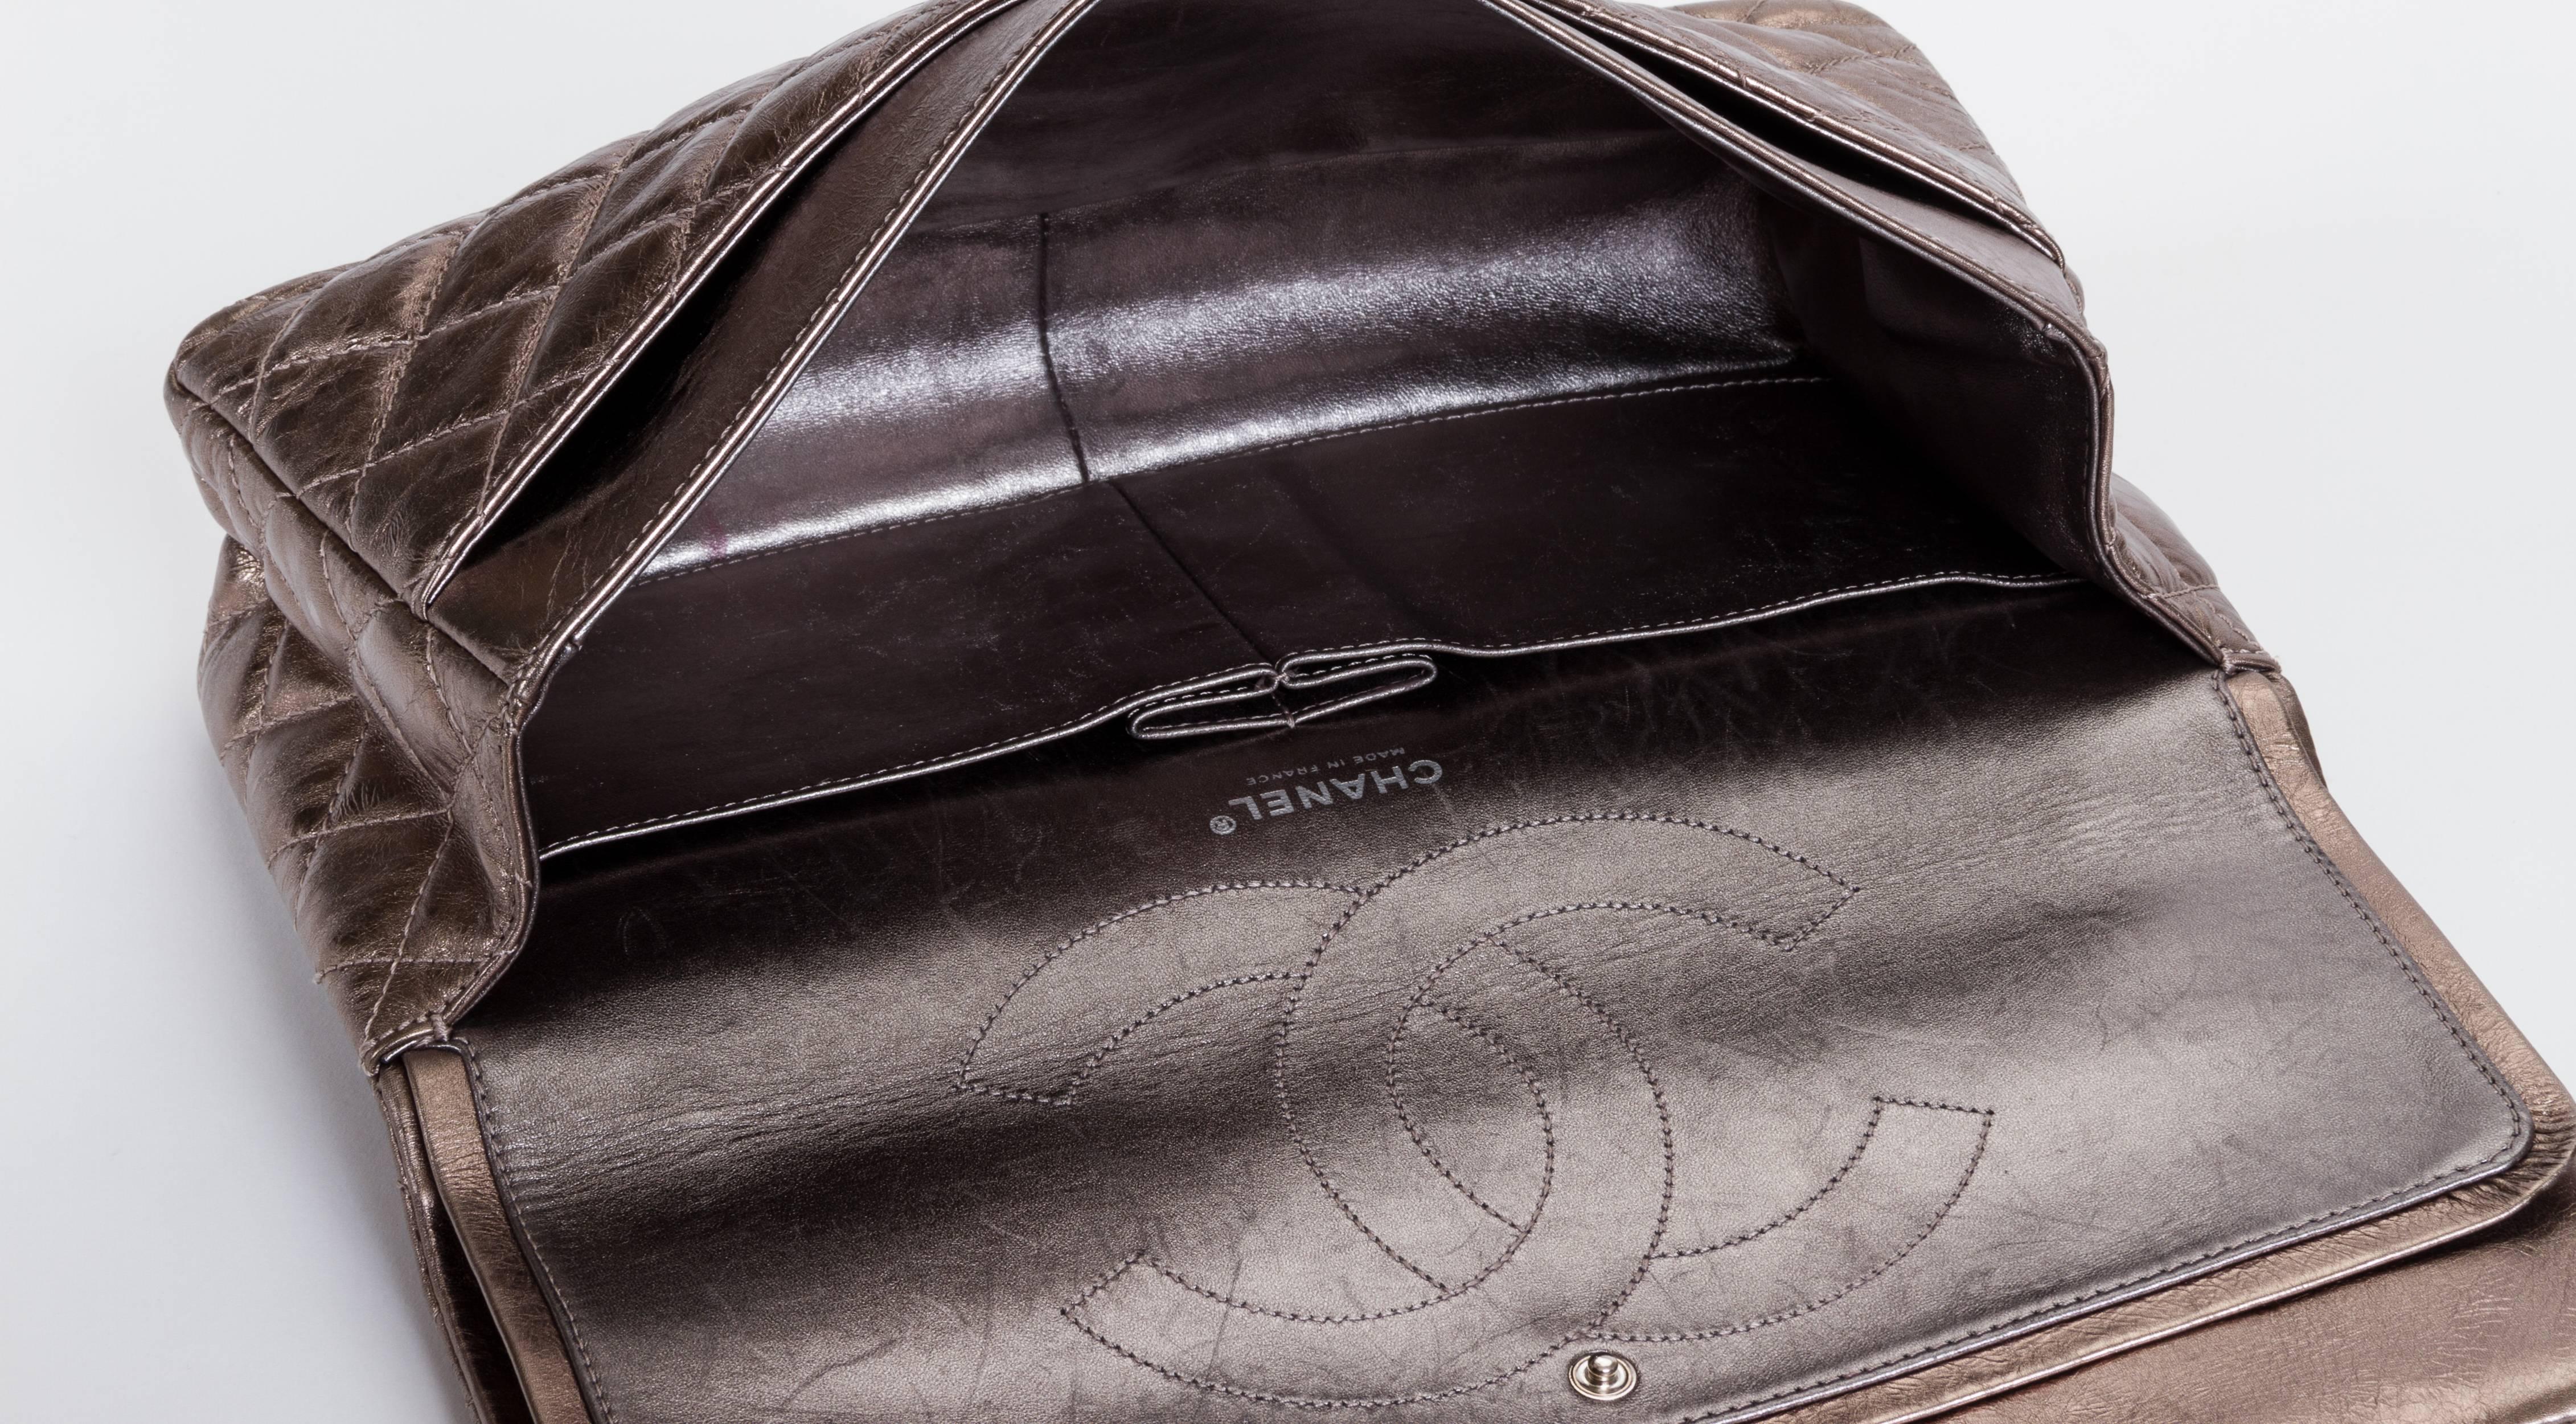 Gray Chanel Metallic Bronze Jumbo Reissue Bag